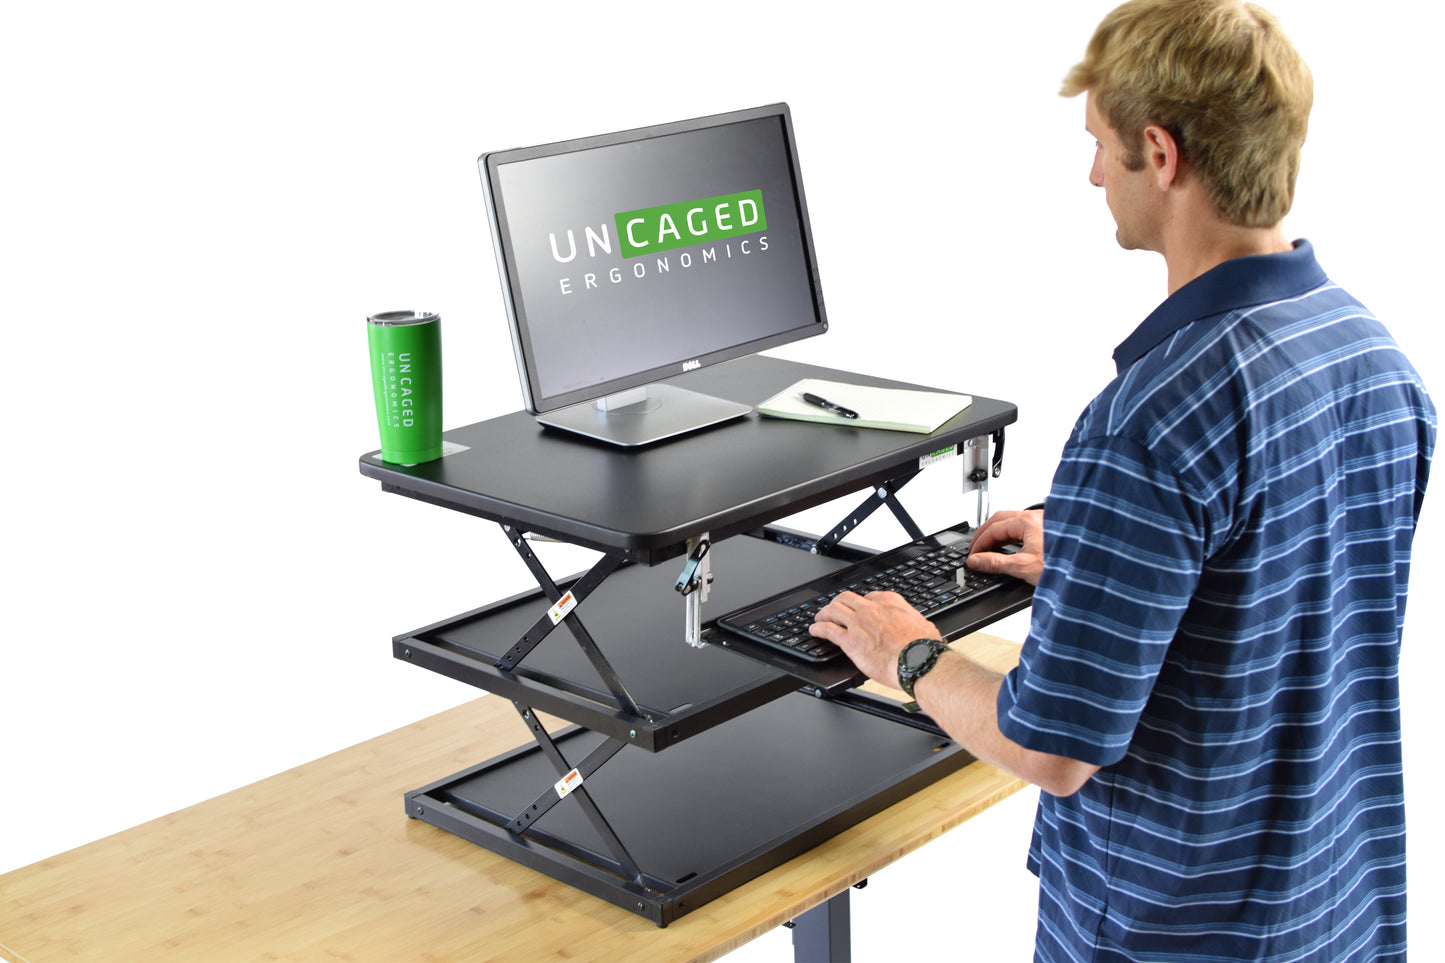 CHANGEdesk - Adjustable Height Standing Desk Conversion